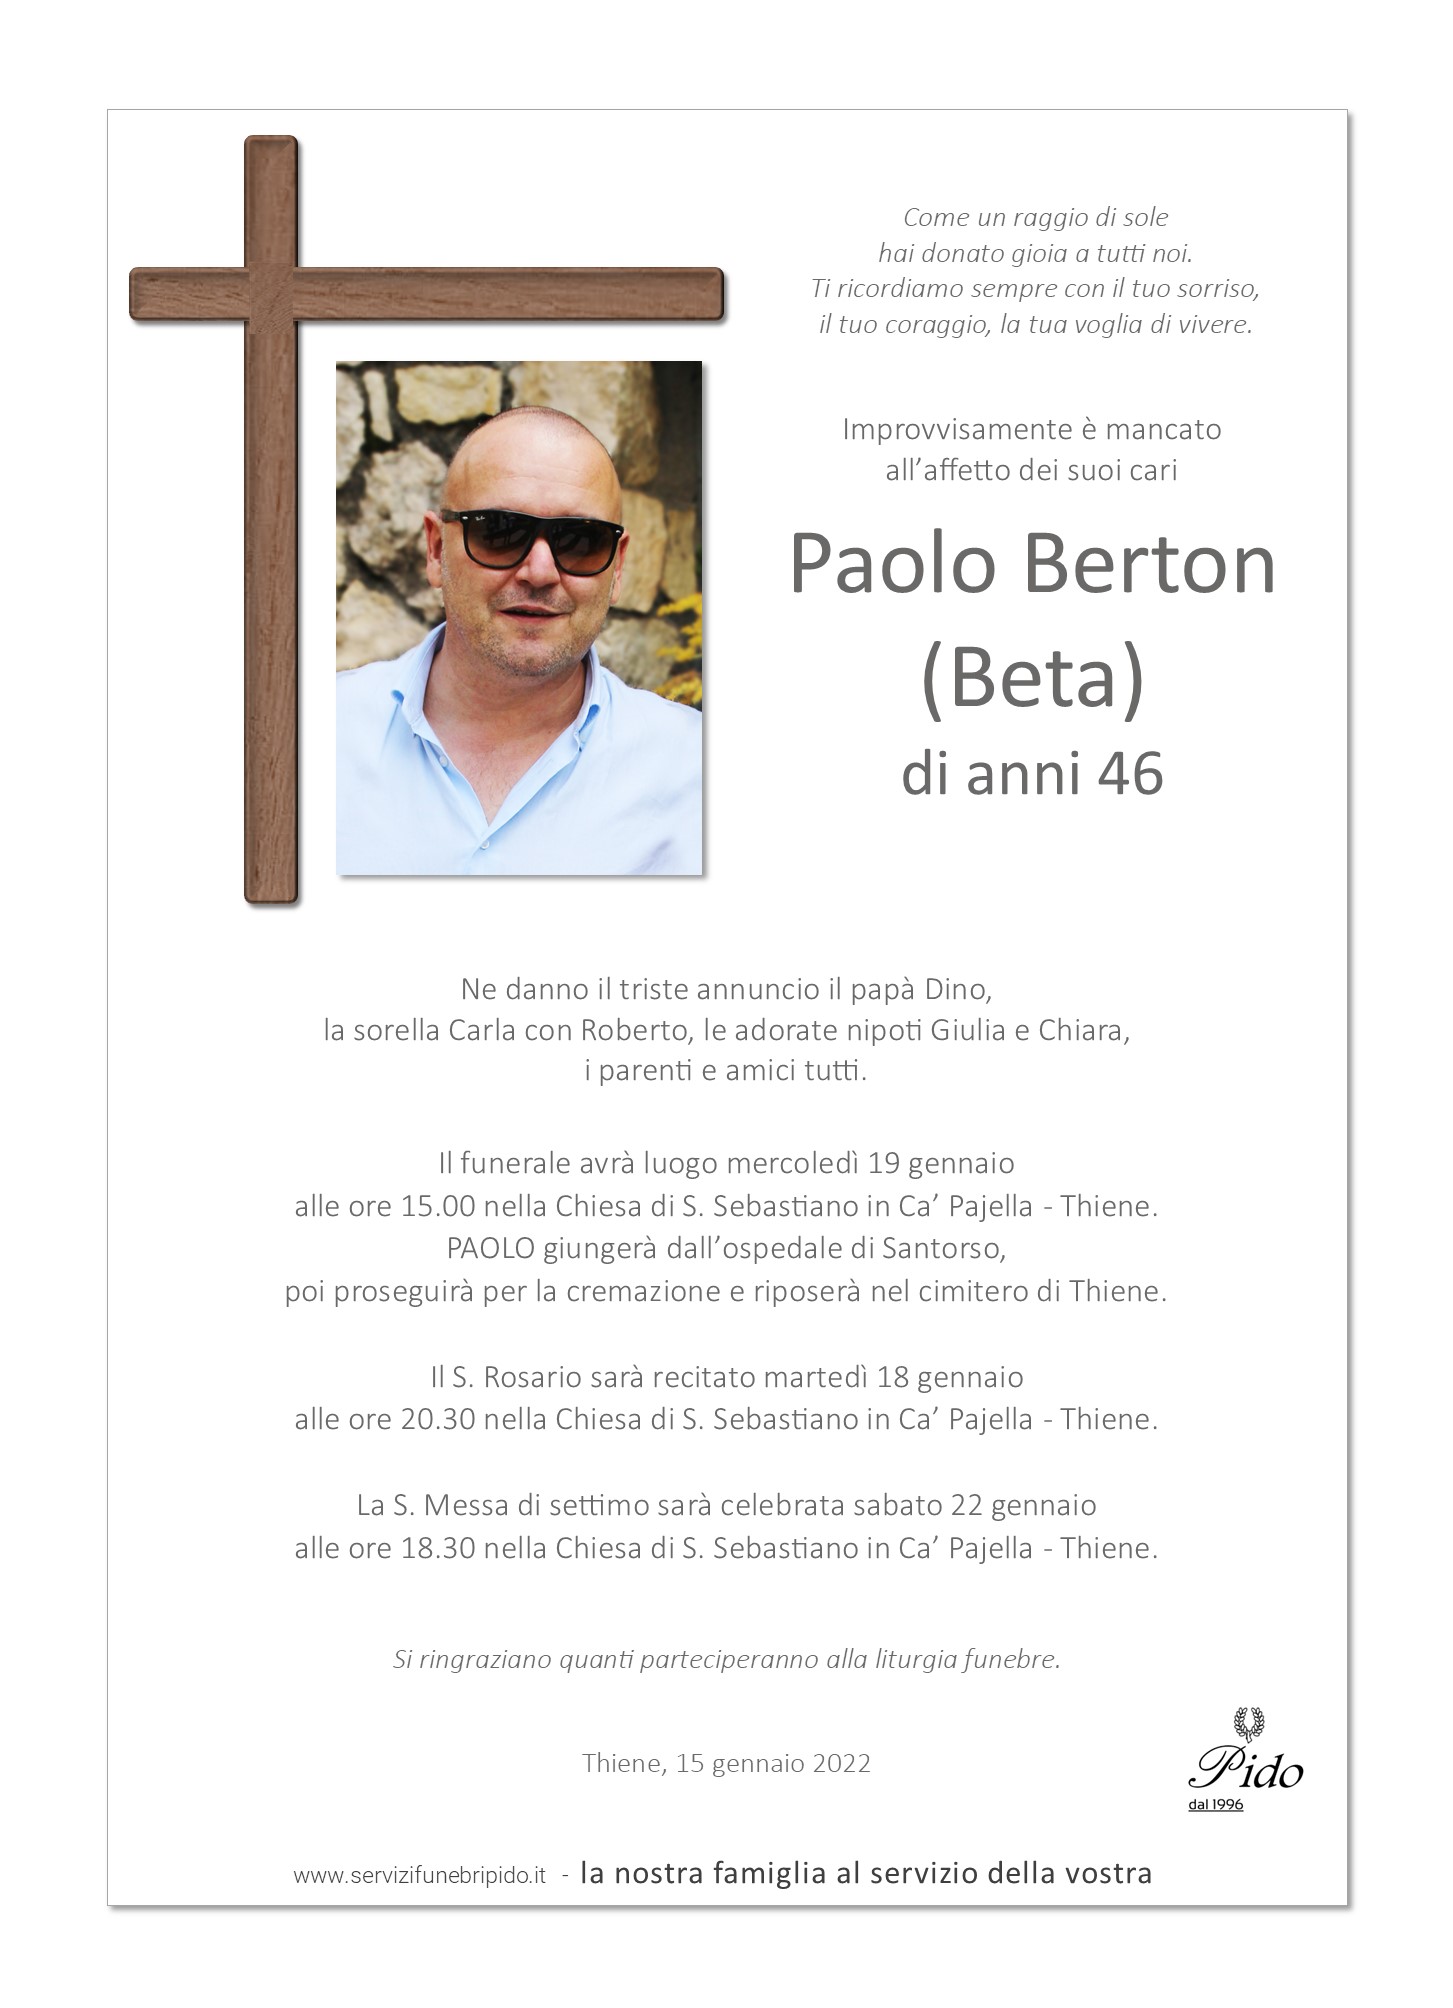 Berton Paolo (Beta)